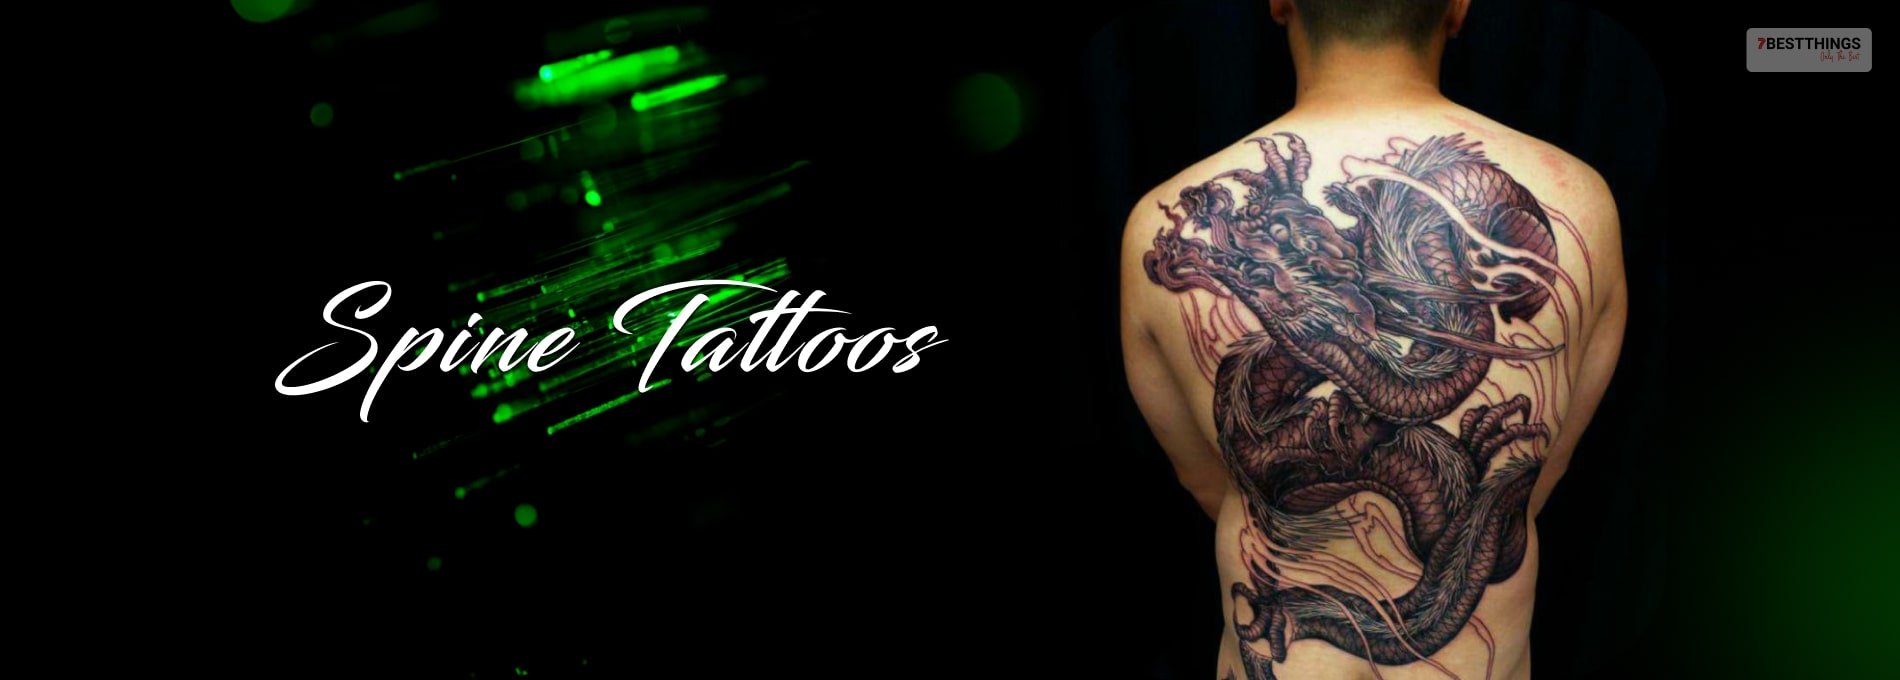 Zoë Kravitzs Tattoos Dragon and Upper Spine Designs  Your Complete Guide  to Zoë Kravitzs Tattoos  POPSUGAR Beauty Photo 5